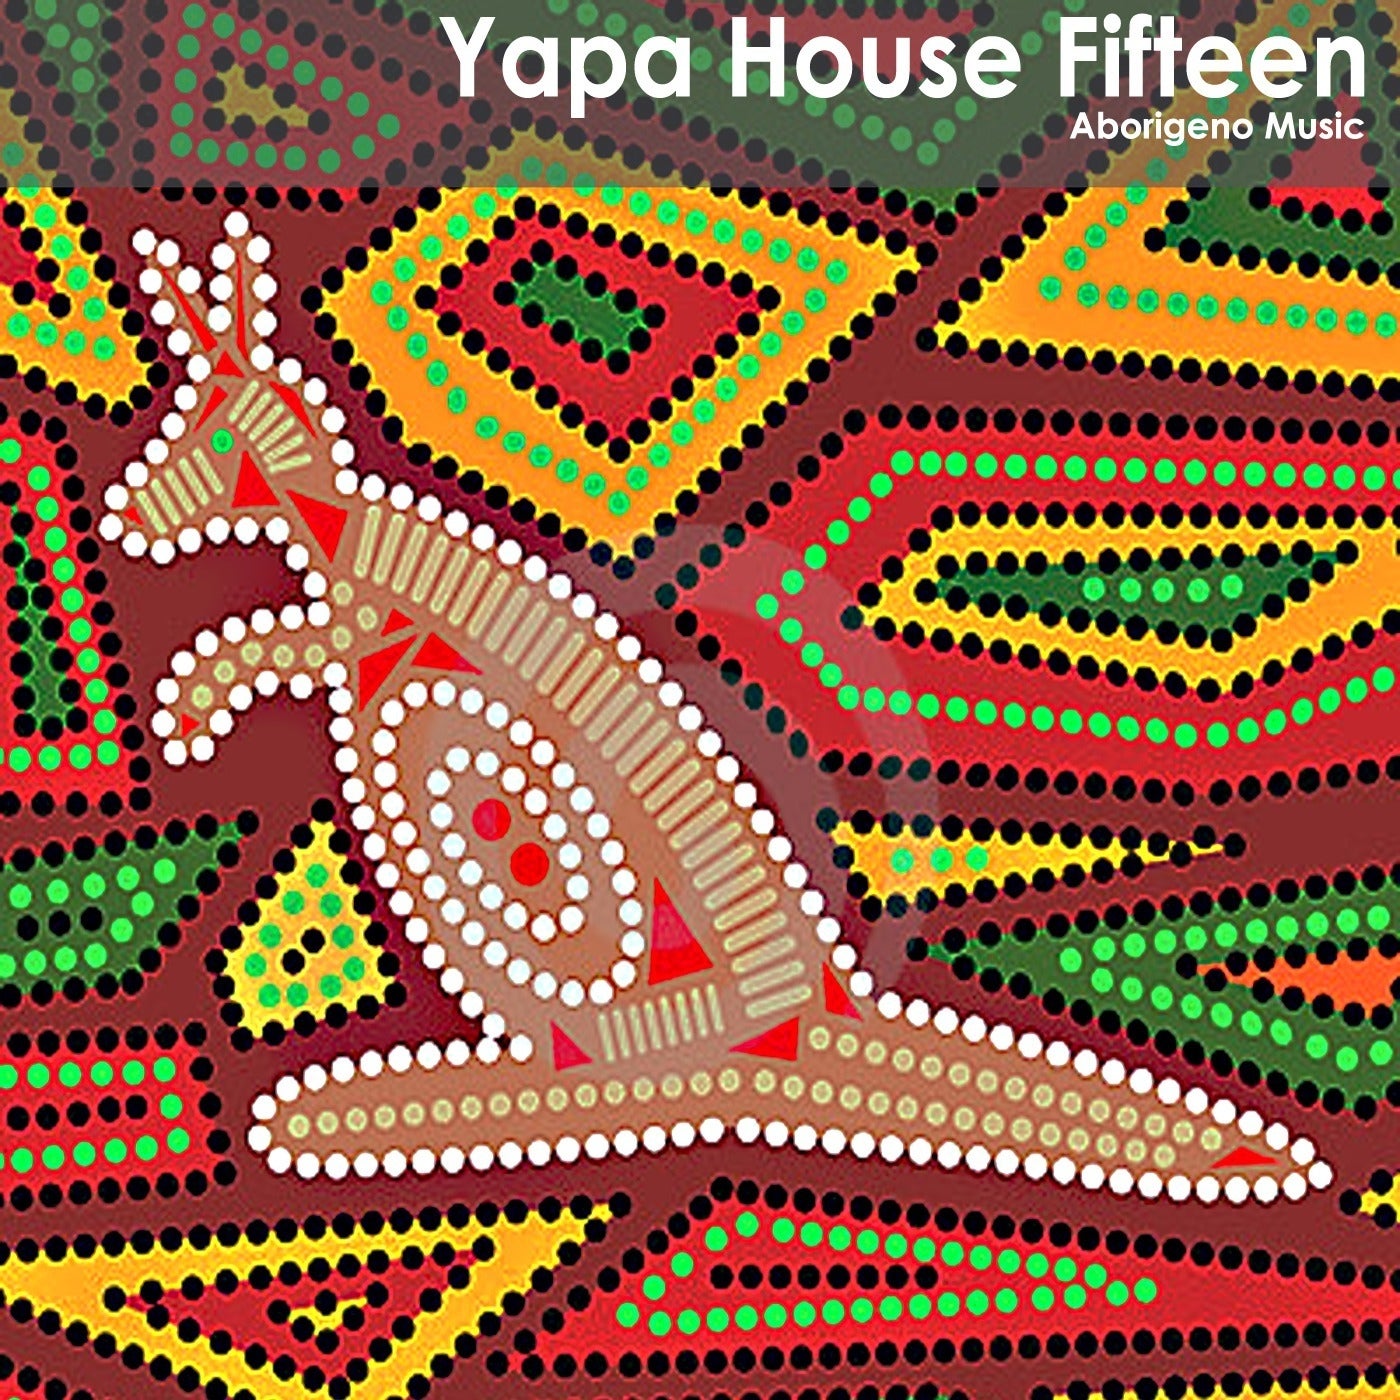 Yapa House Fifteen